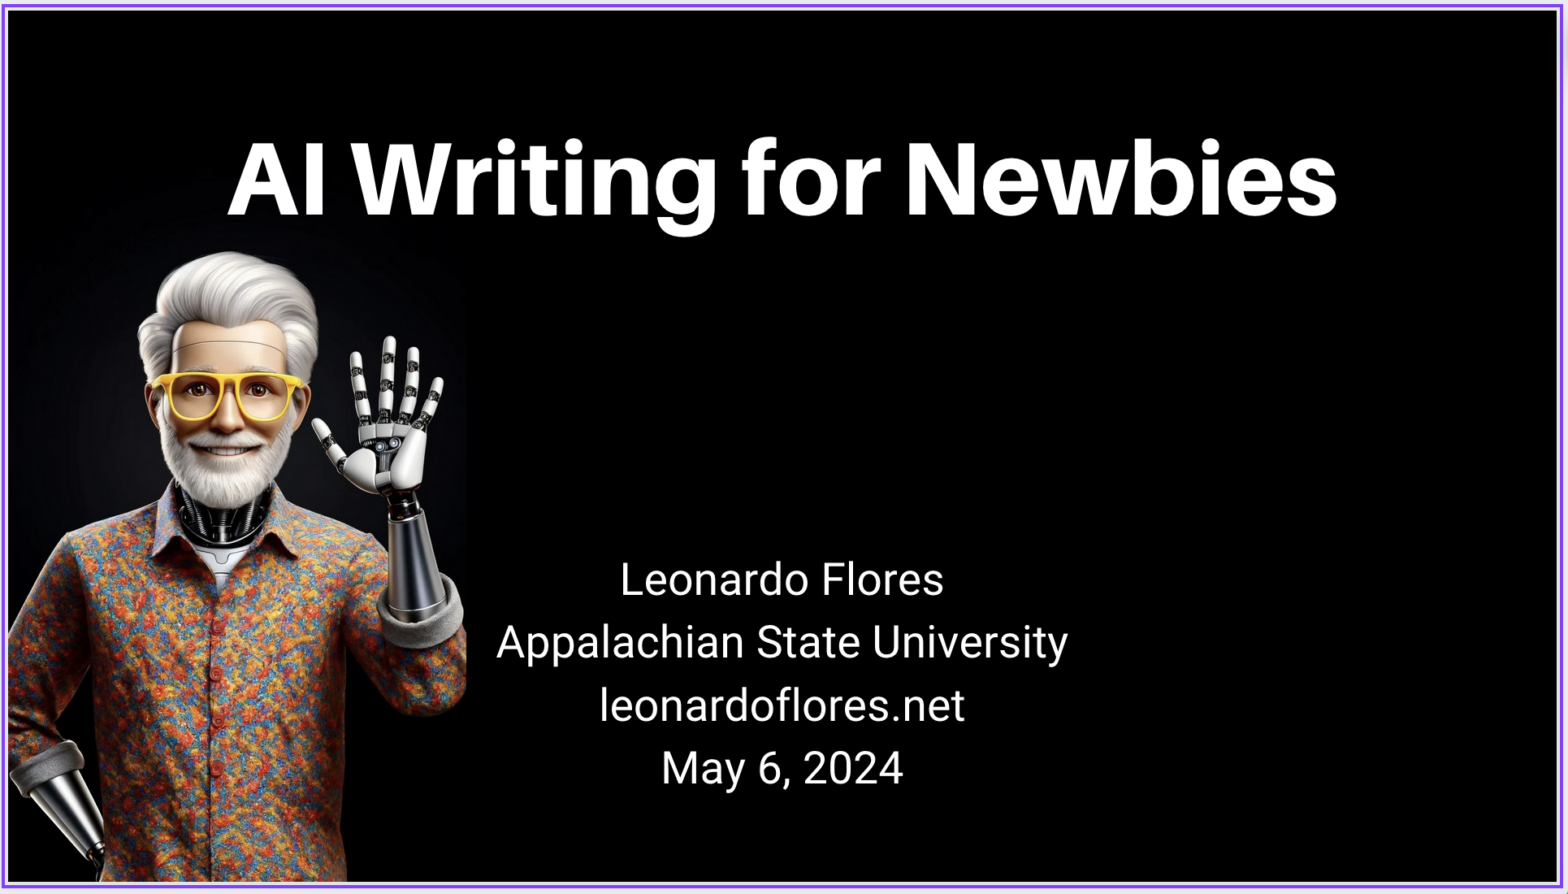 Cyborg Leo waves in a slide titled "AI Writing for Newbies."